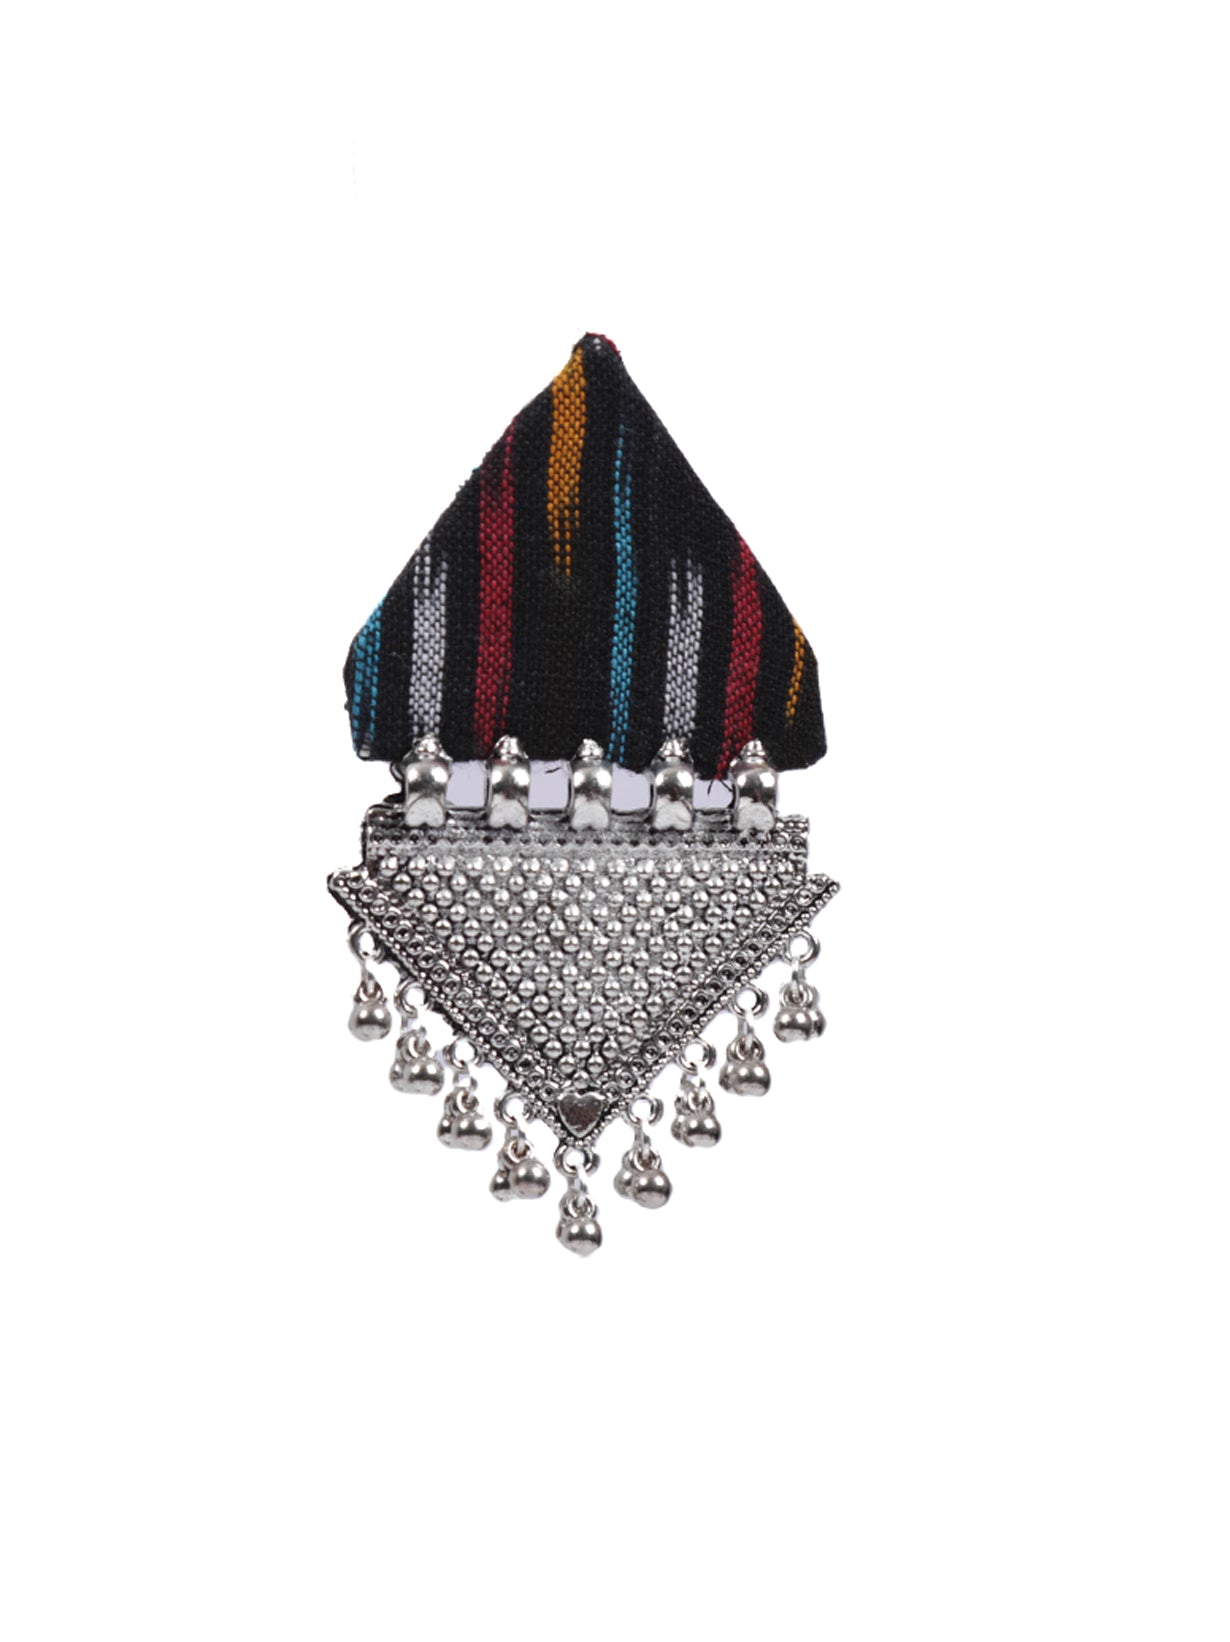 Black Ikat Fabric Earrings with Metal Detailing